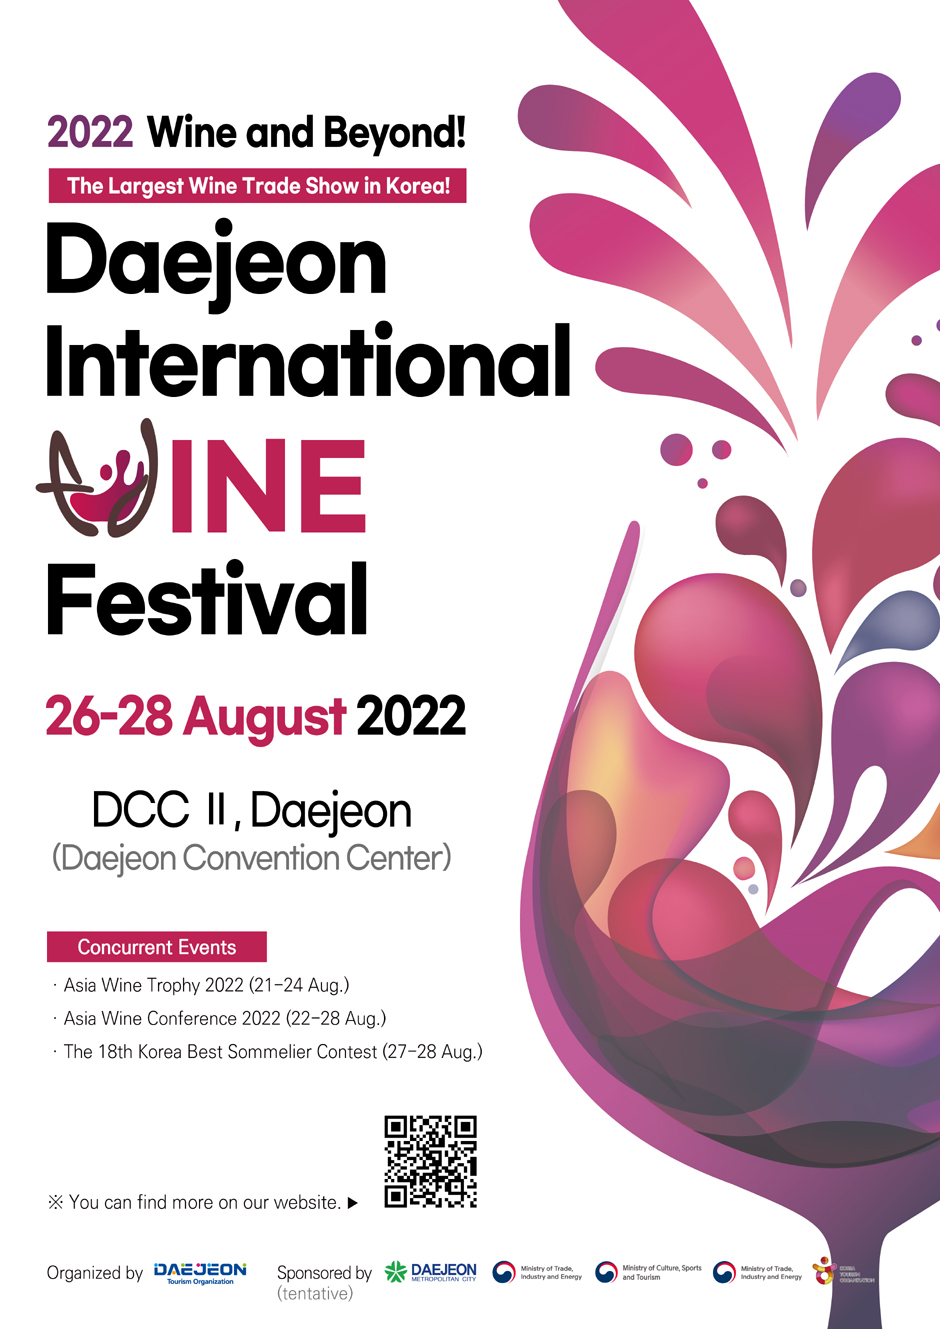 Daejeon International Wine Festival